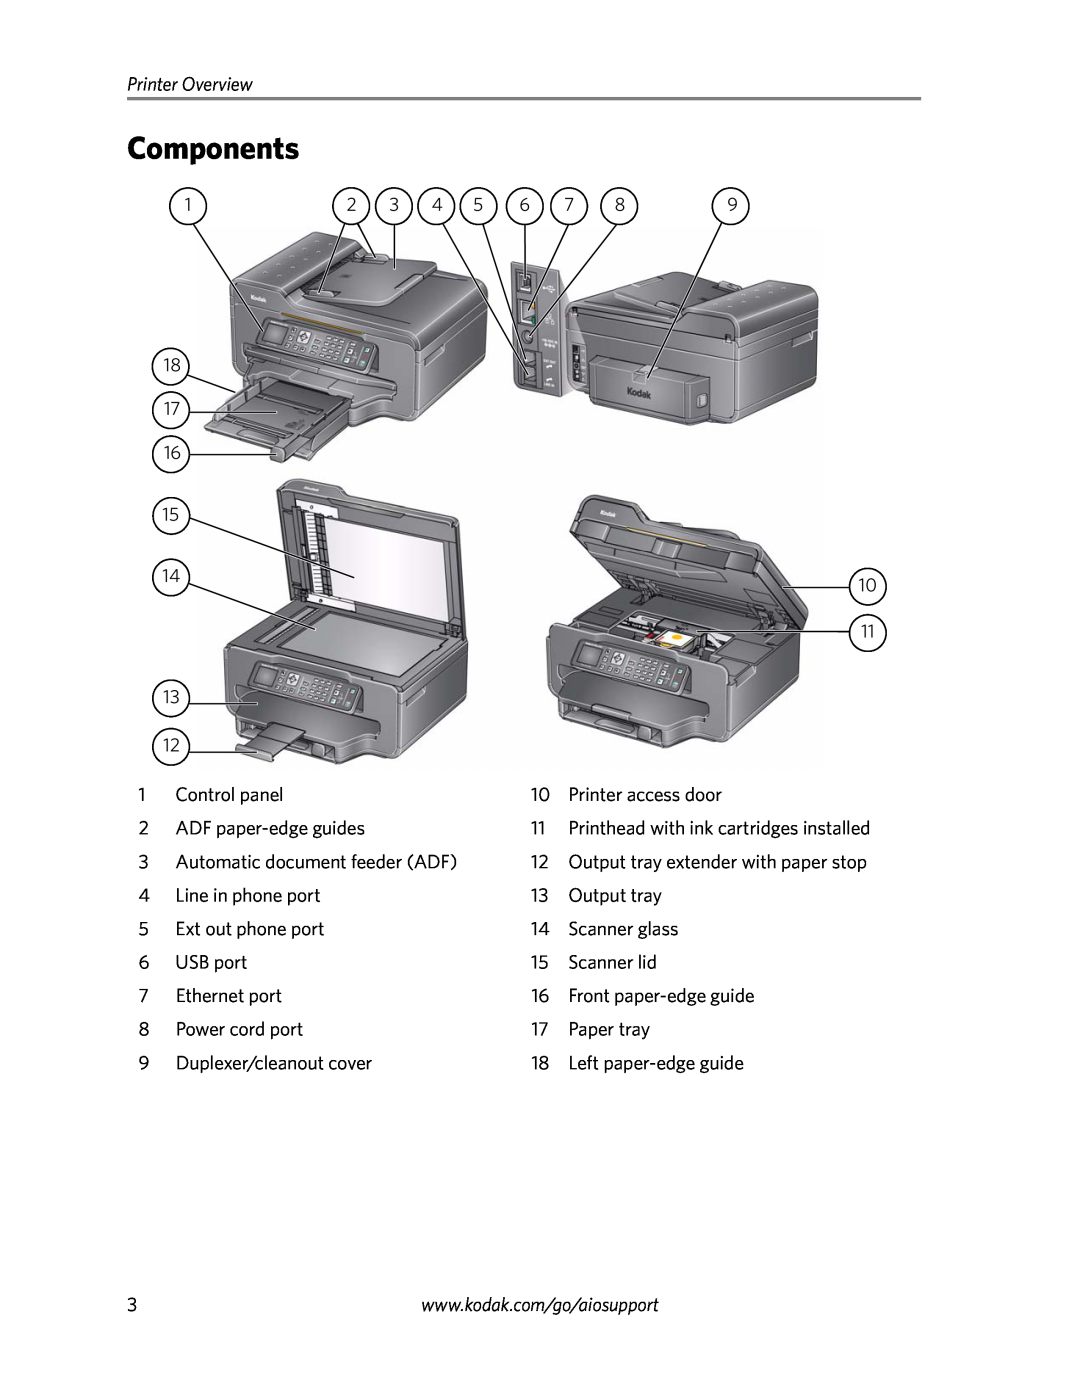 Kodak 6100 Series manual Components, Printer Overview 